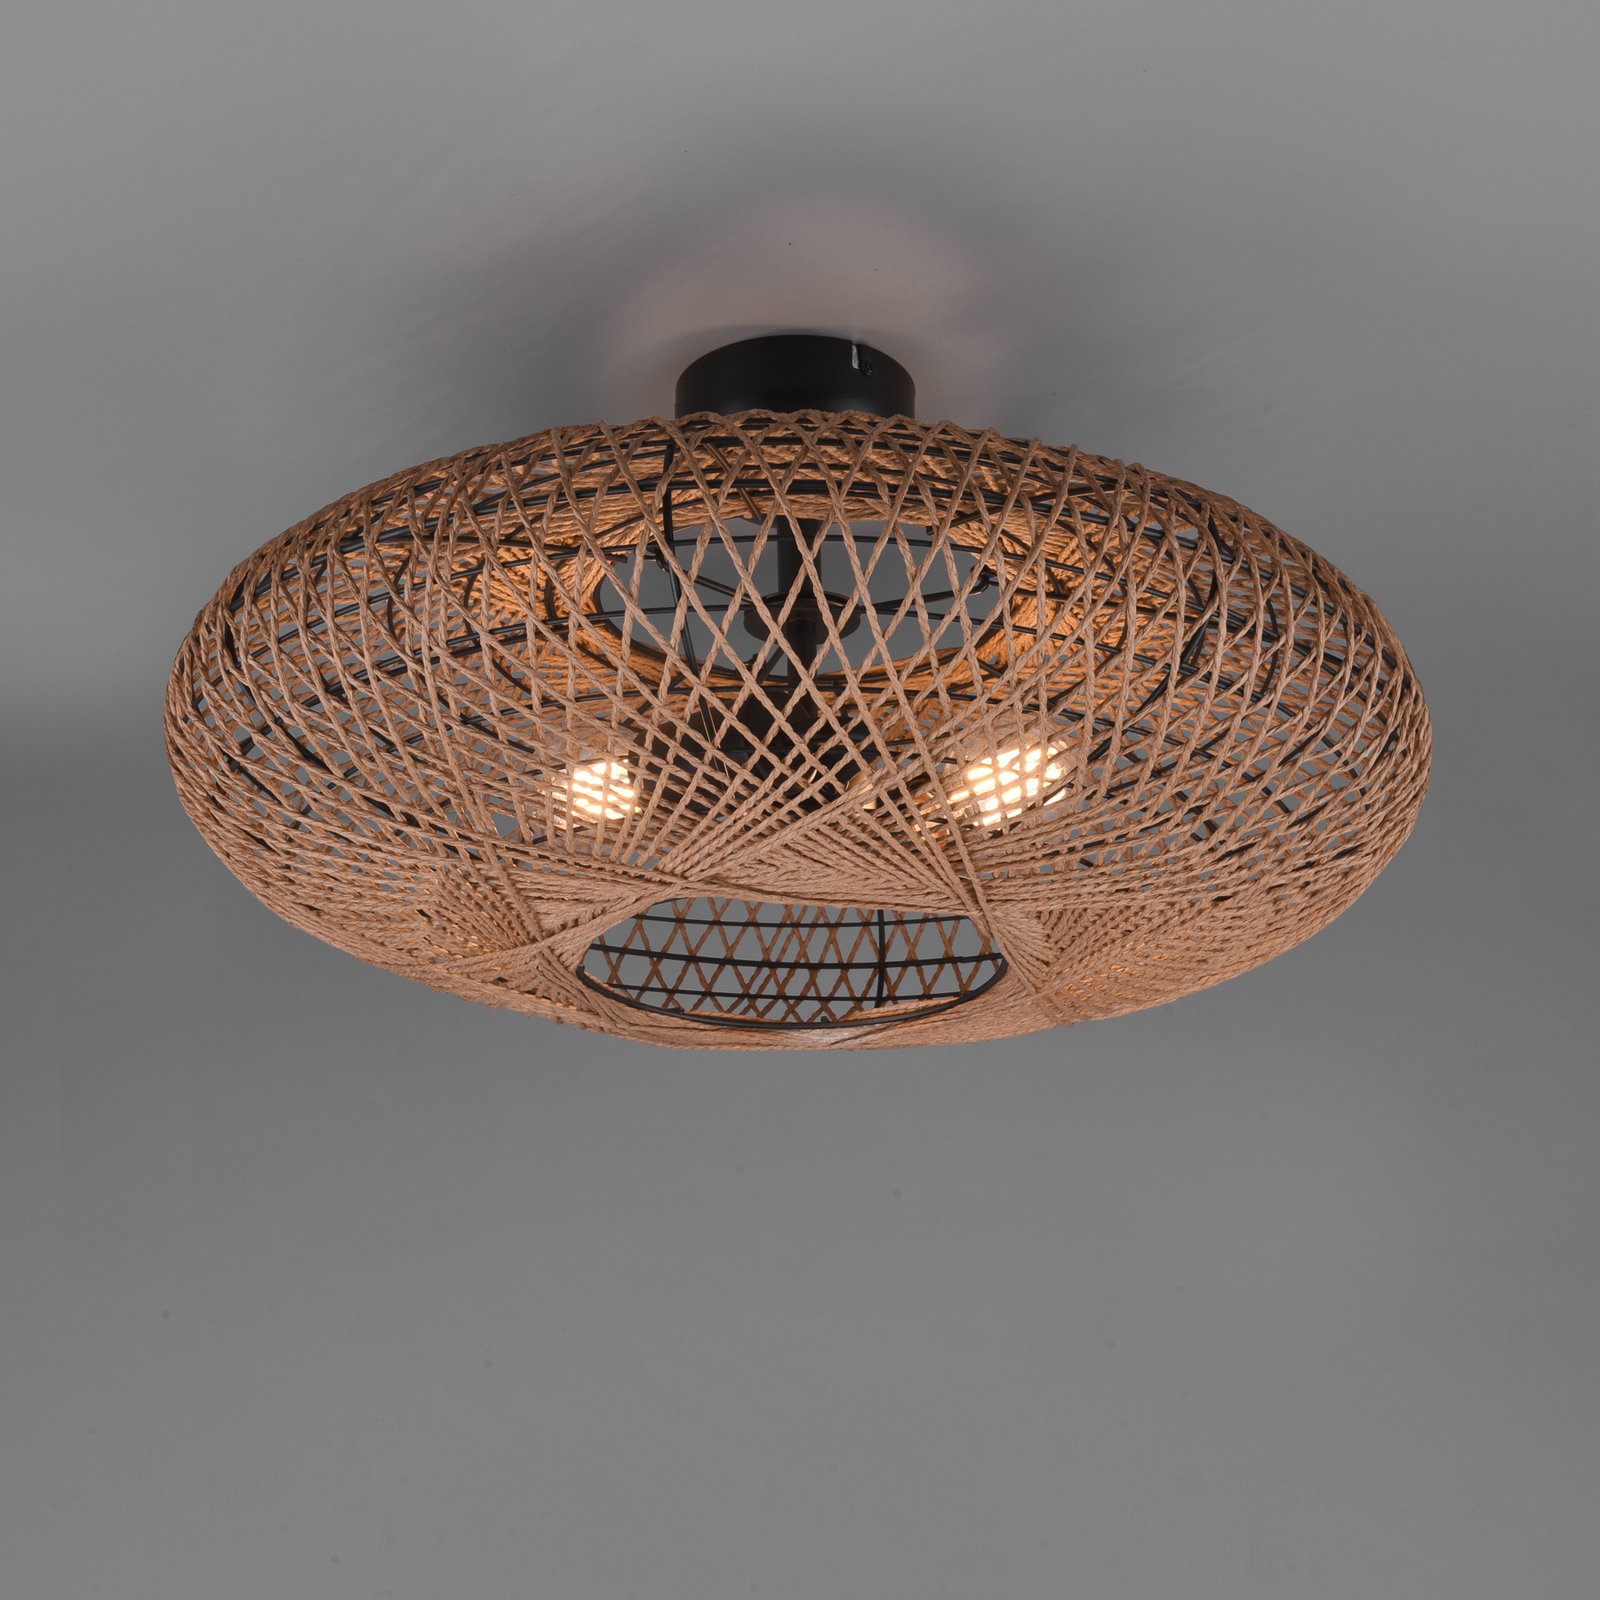 Hedda ceiling light made of sisal and metal